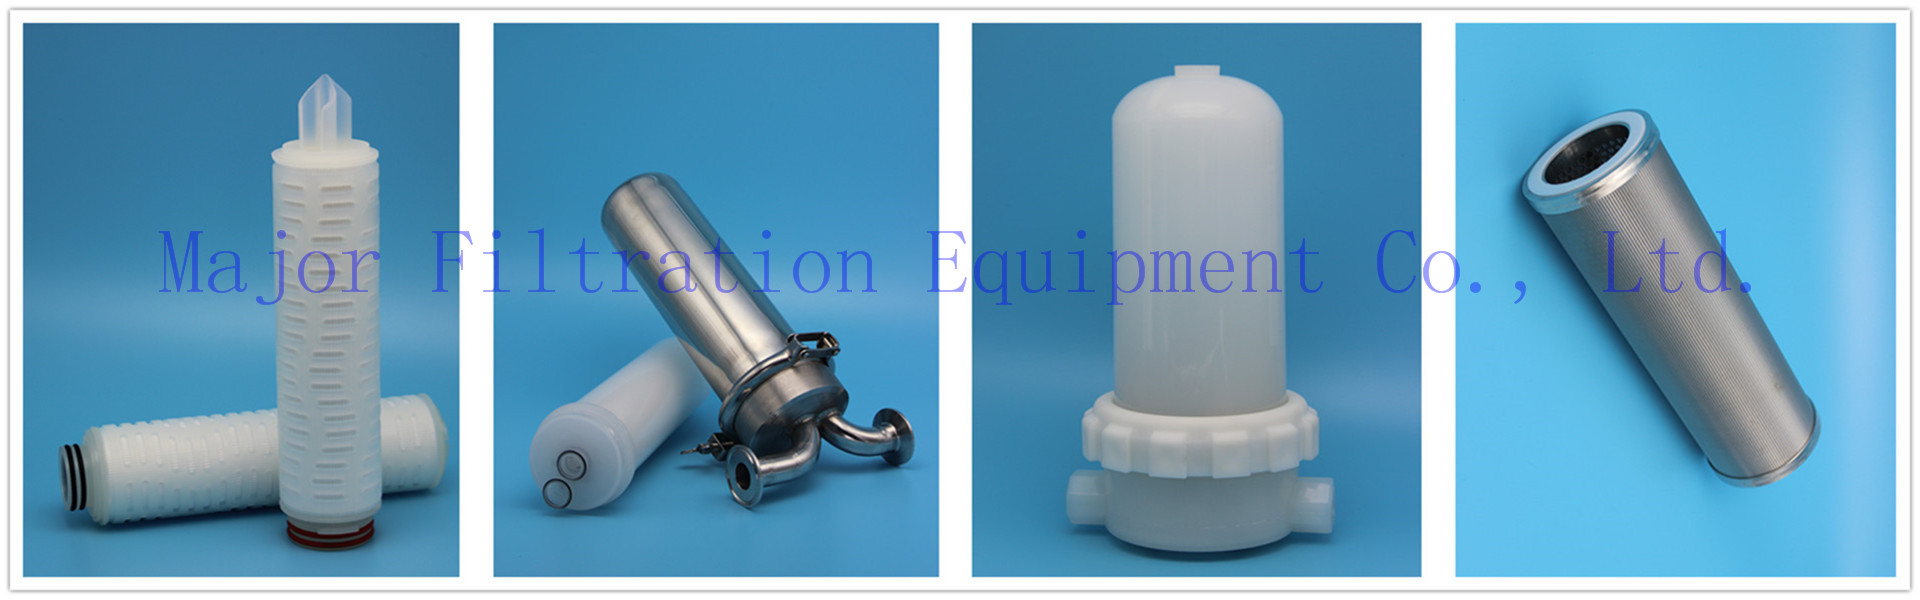 Major Filtration Equipment Co., Ltd.